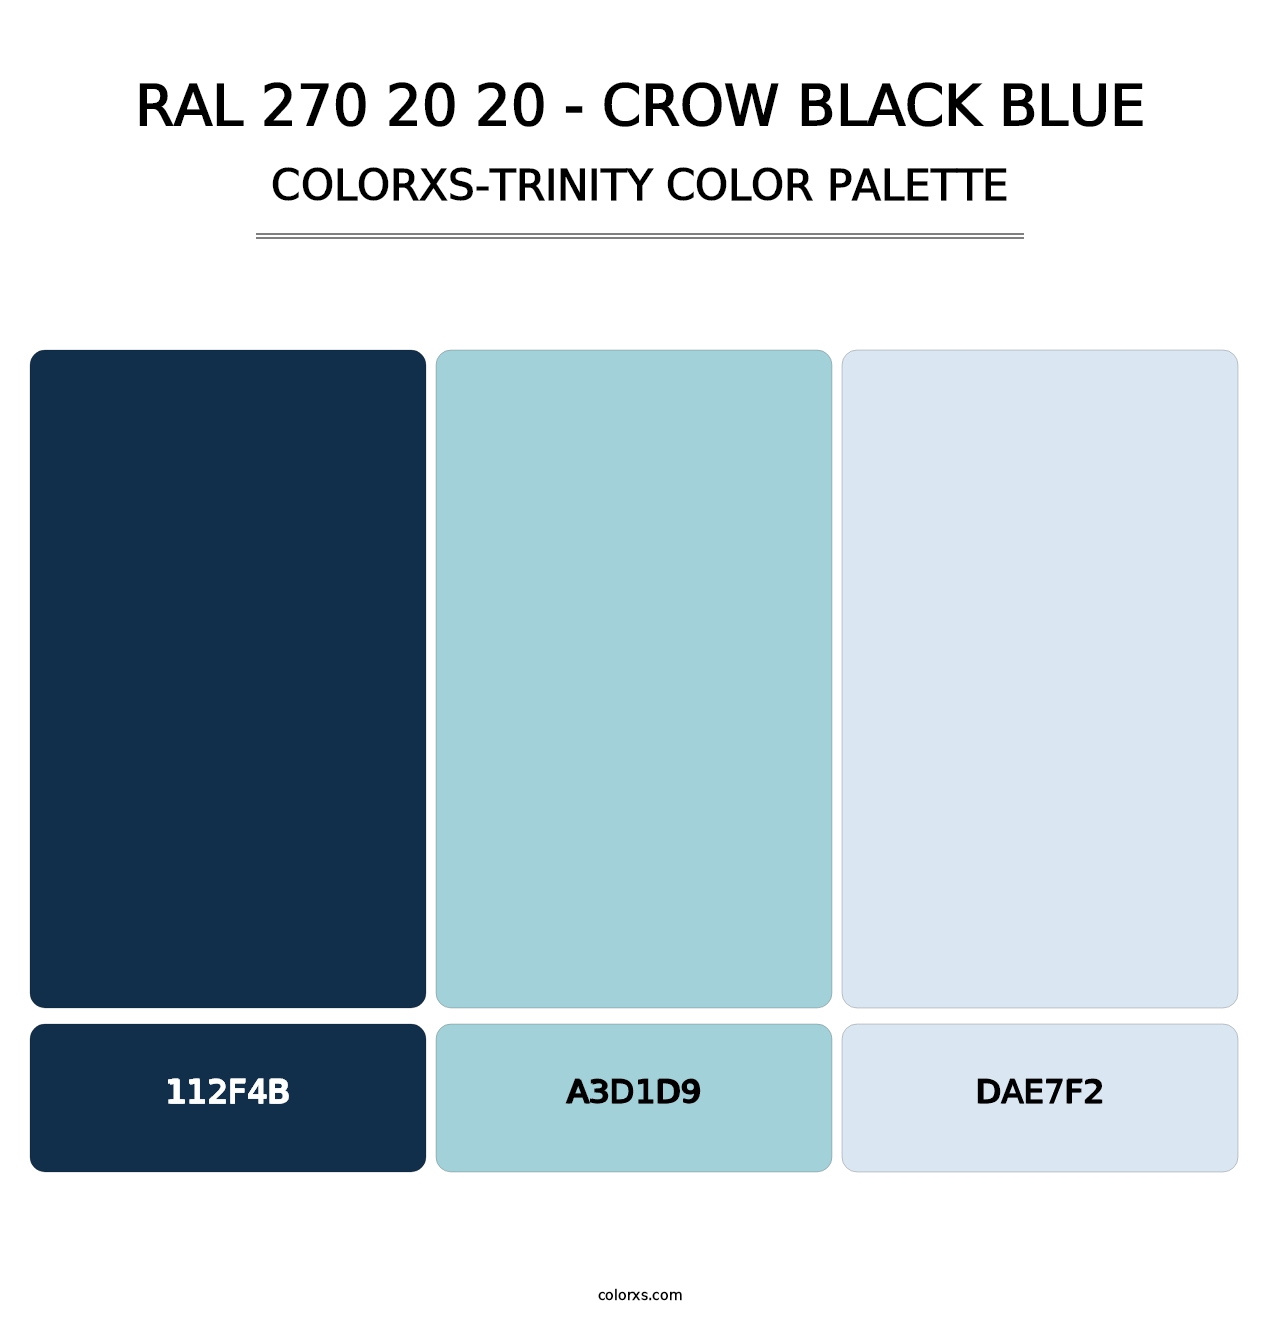 RAL 270 20 20 - Crow Black Blue - Colorxs Trinity Palette